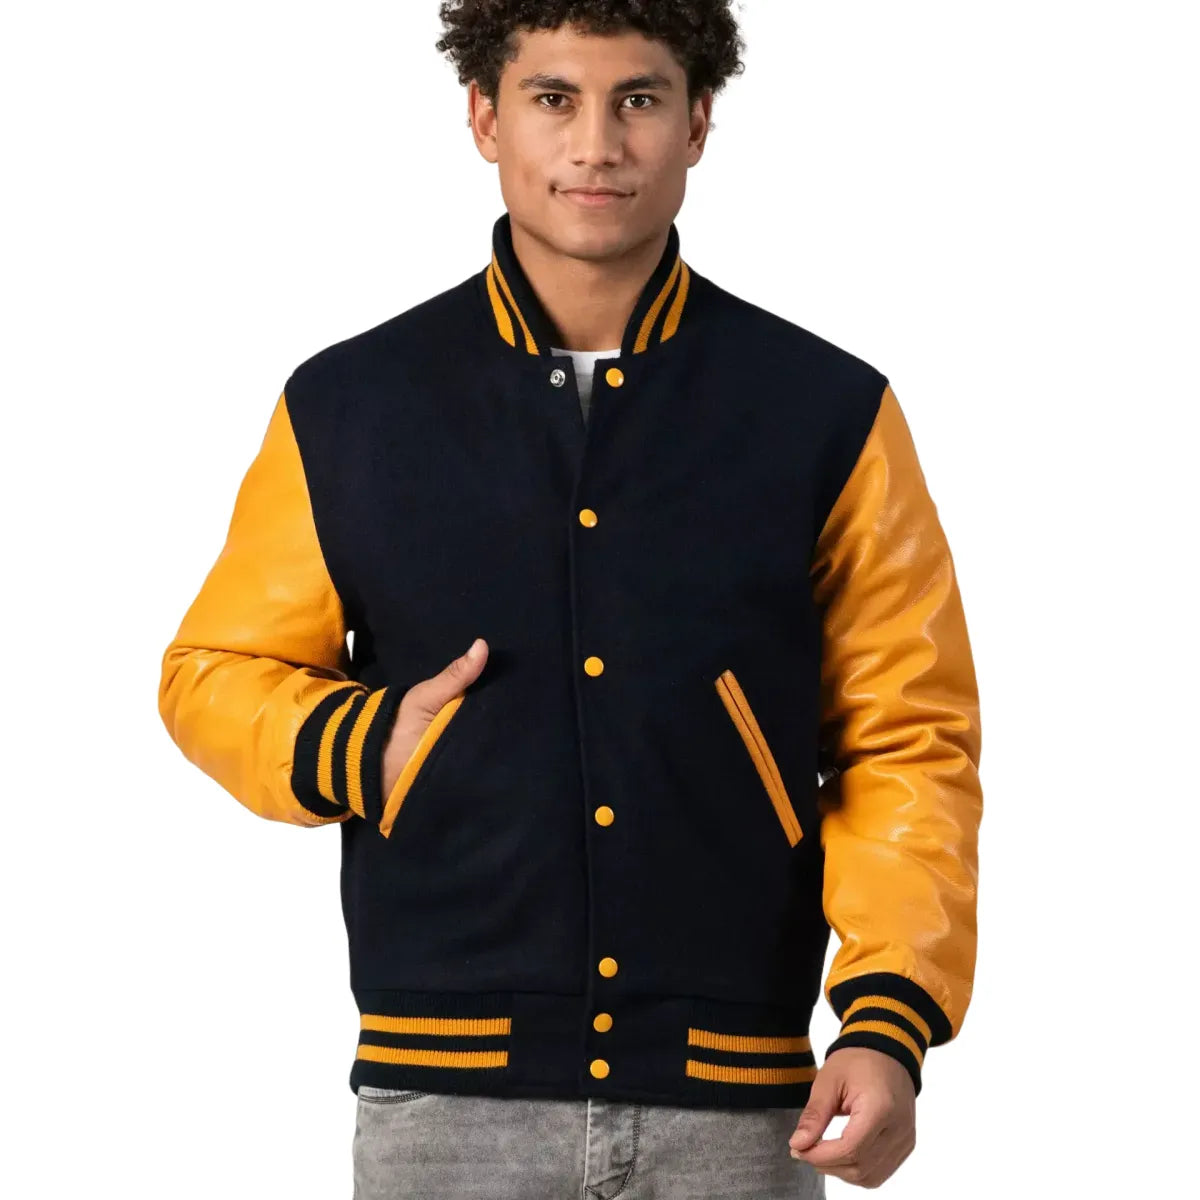 Mens-Black-and-Yellow-Varsity-Jacket-Front